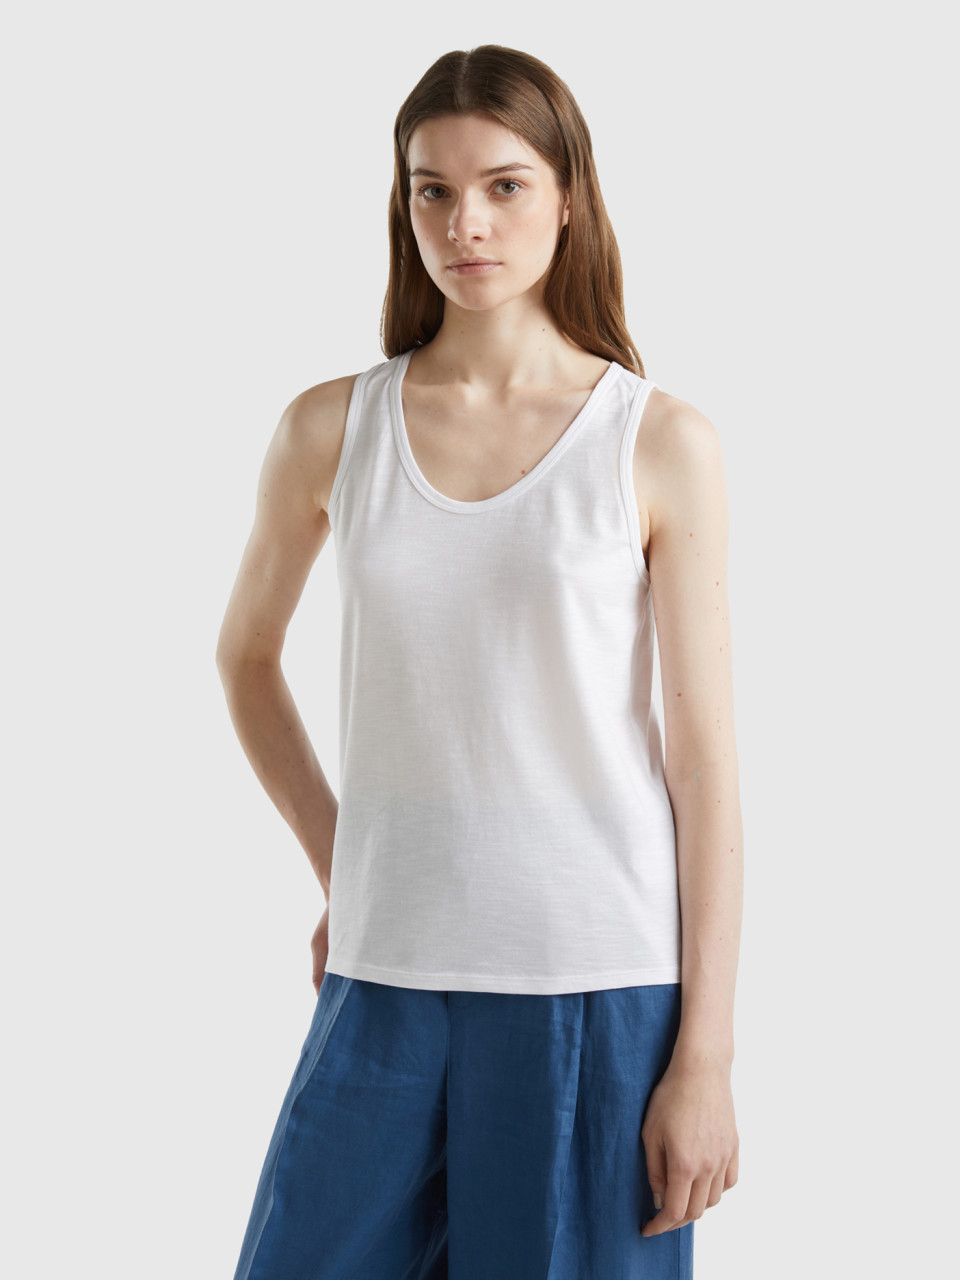 Benetton, Camiseta De Tirantes De Algodón Ligero, Blanco, Mujer